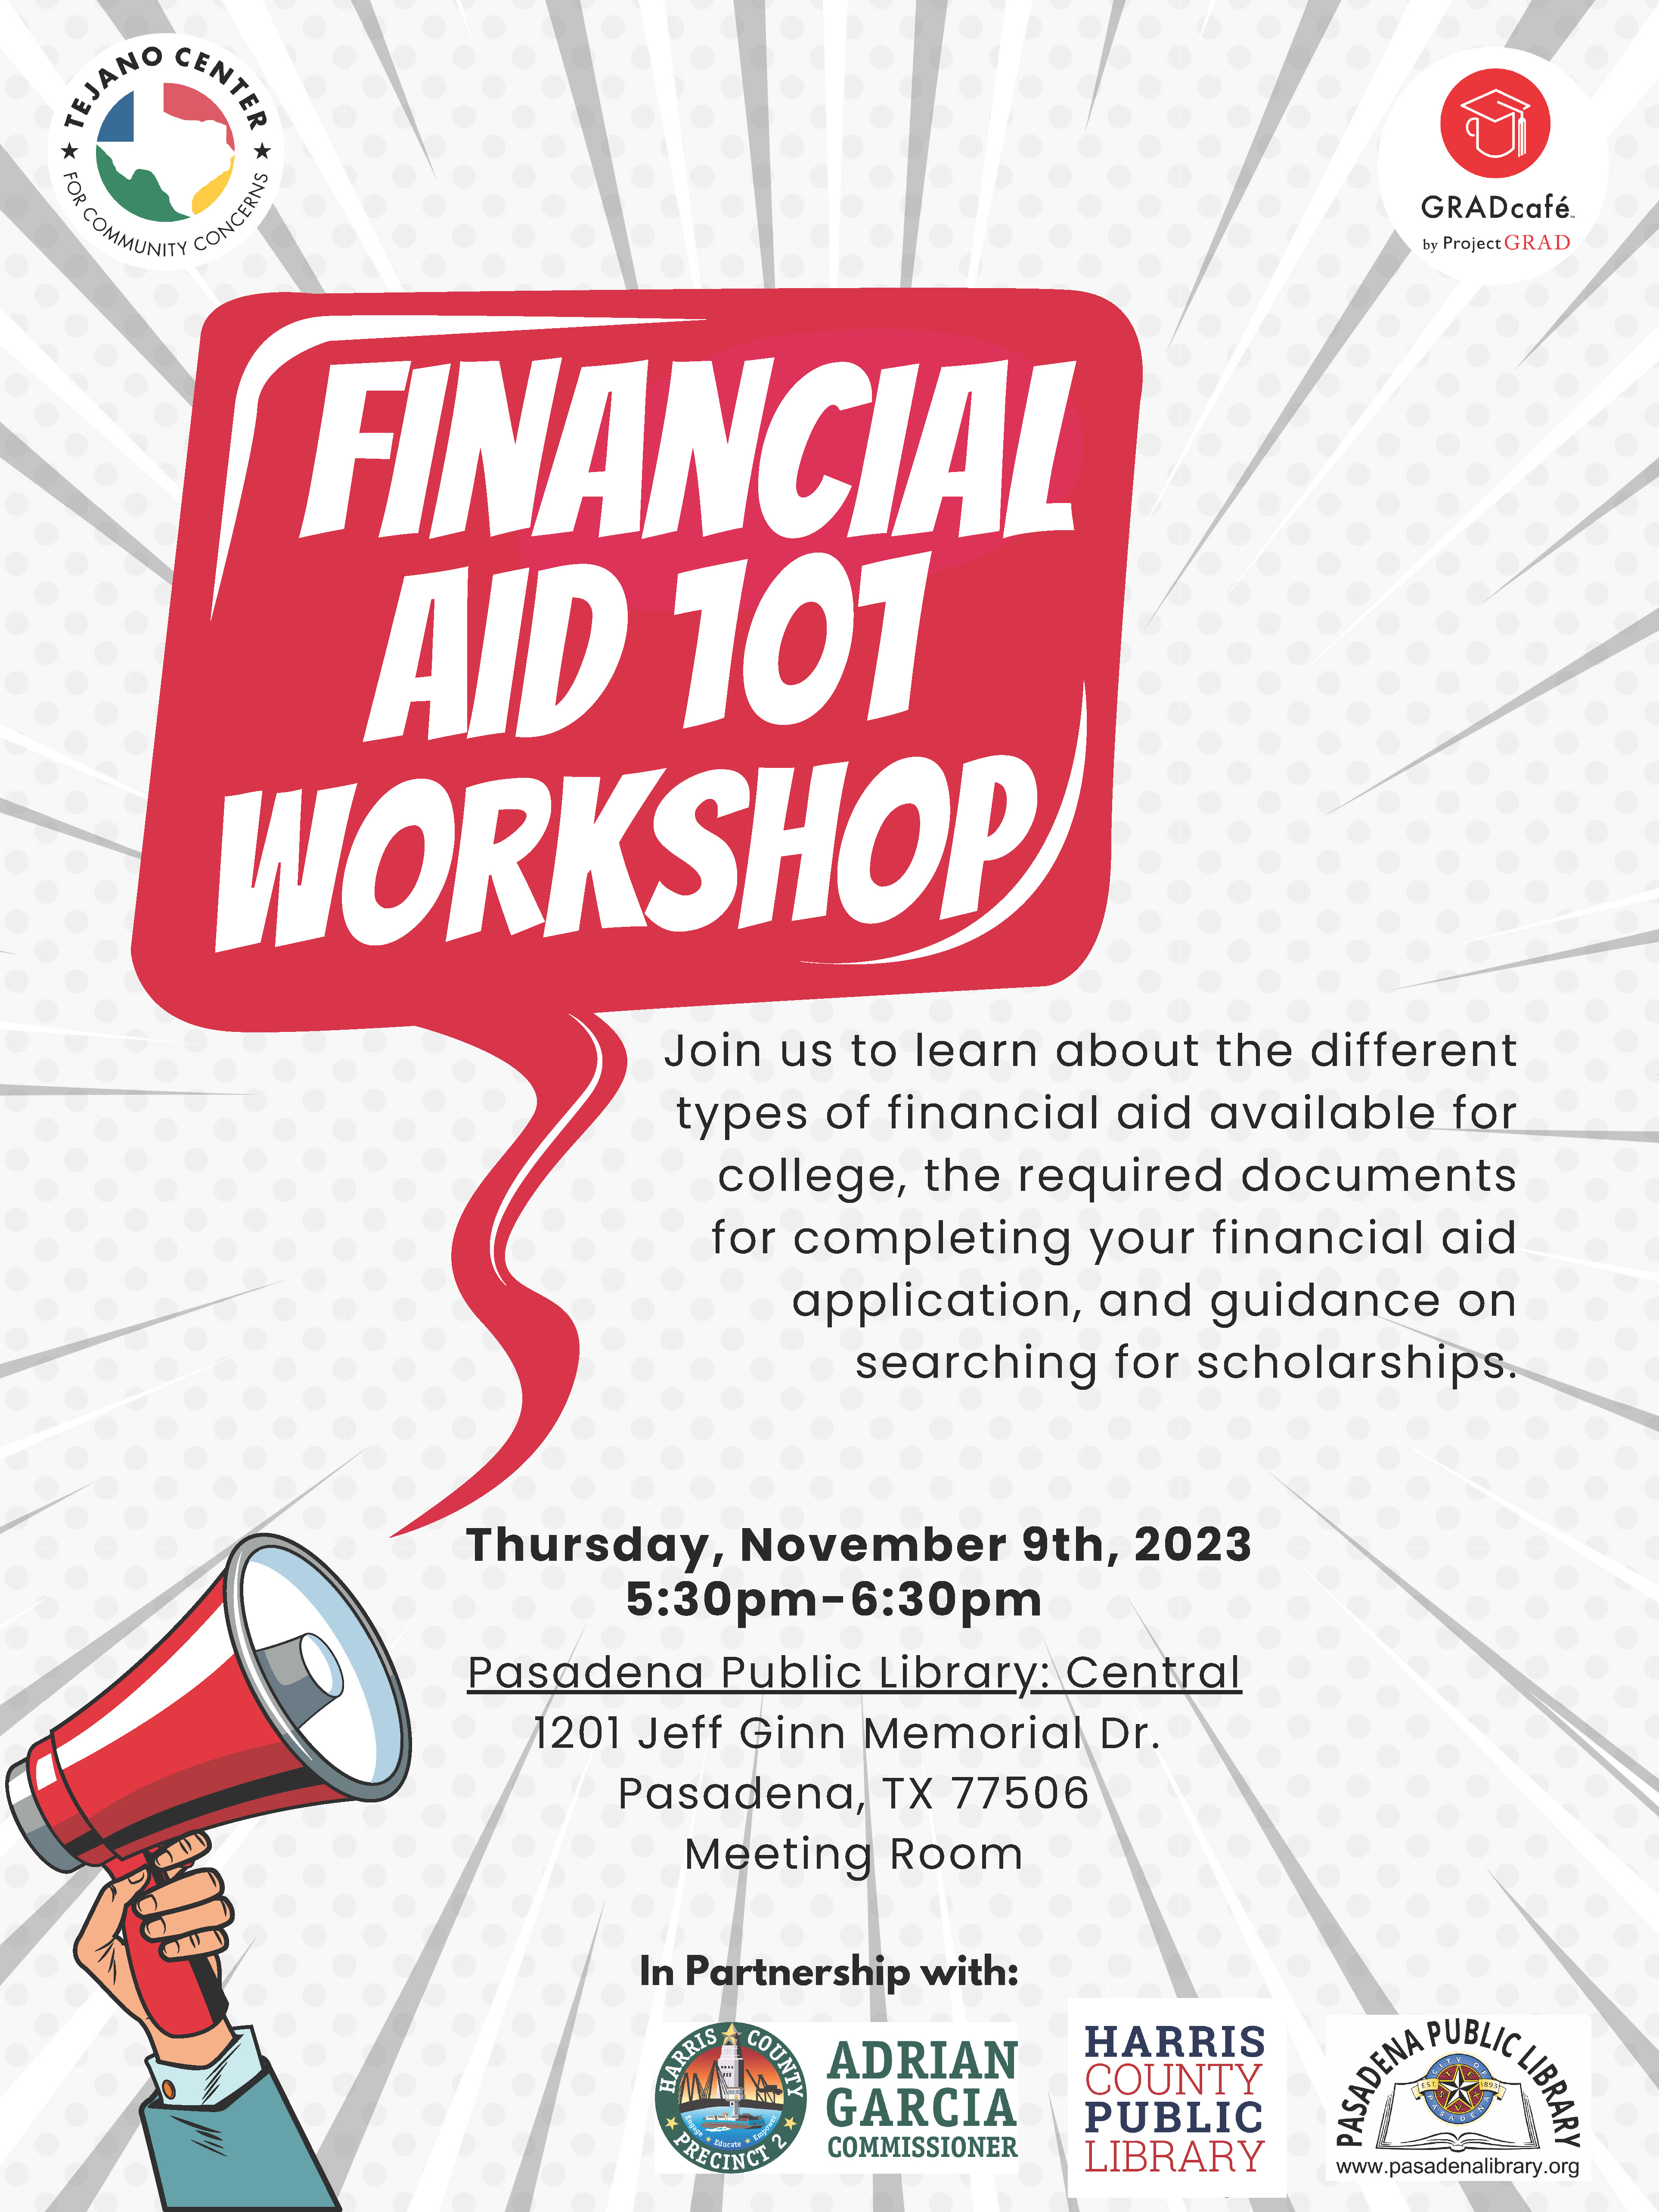 Pasadena Financial Aid 101 Workshop